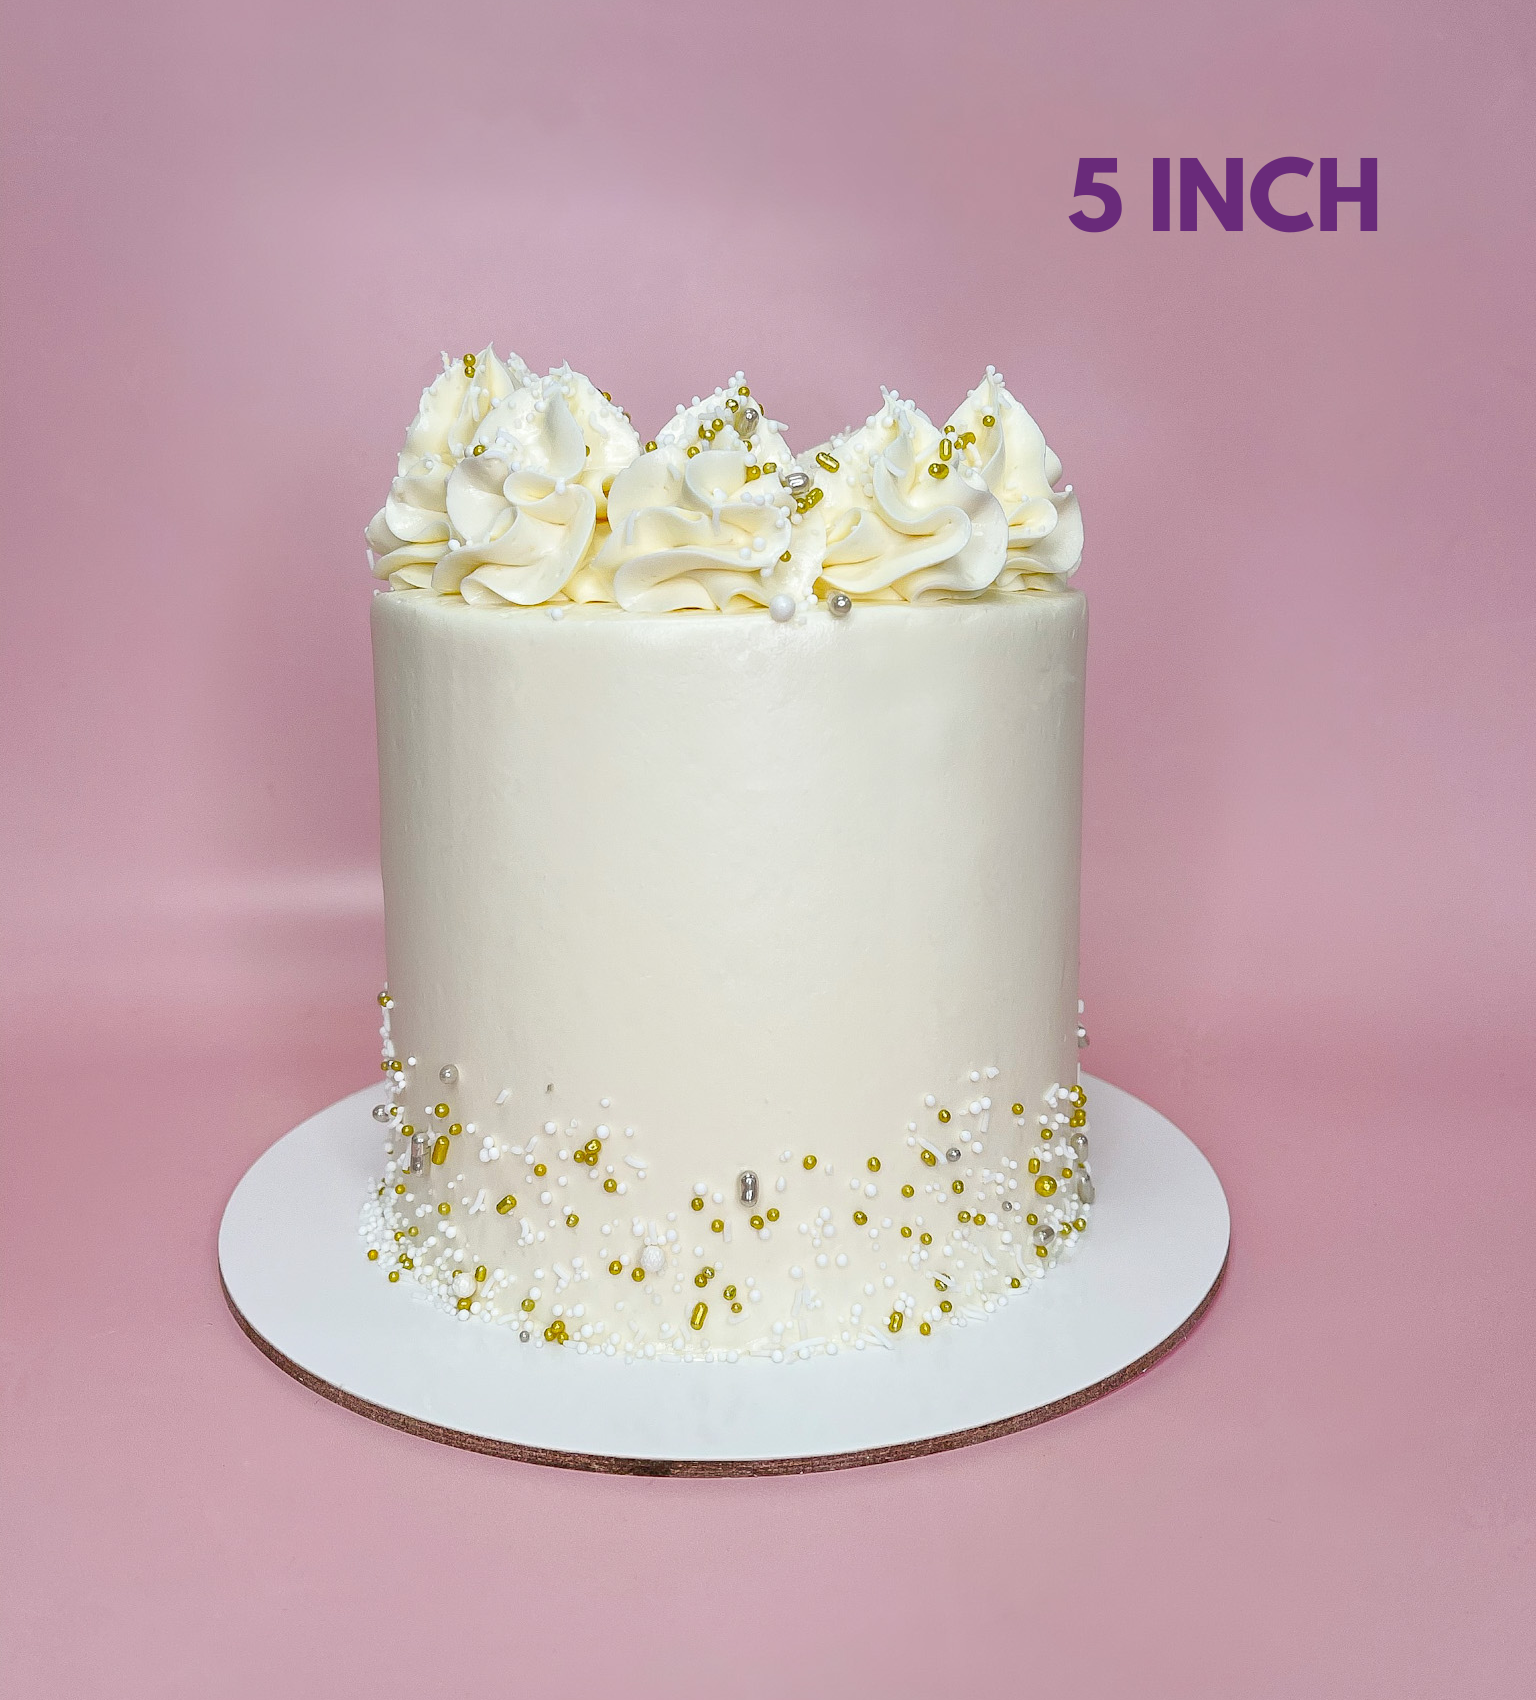 White Chocolate Raspberry Cake - The Cake Chica